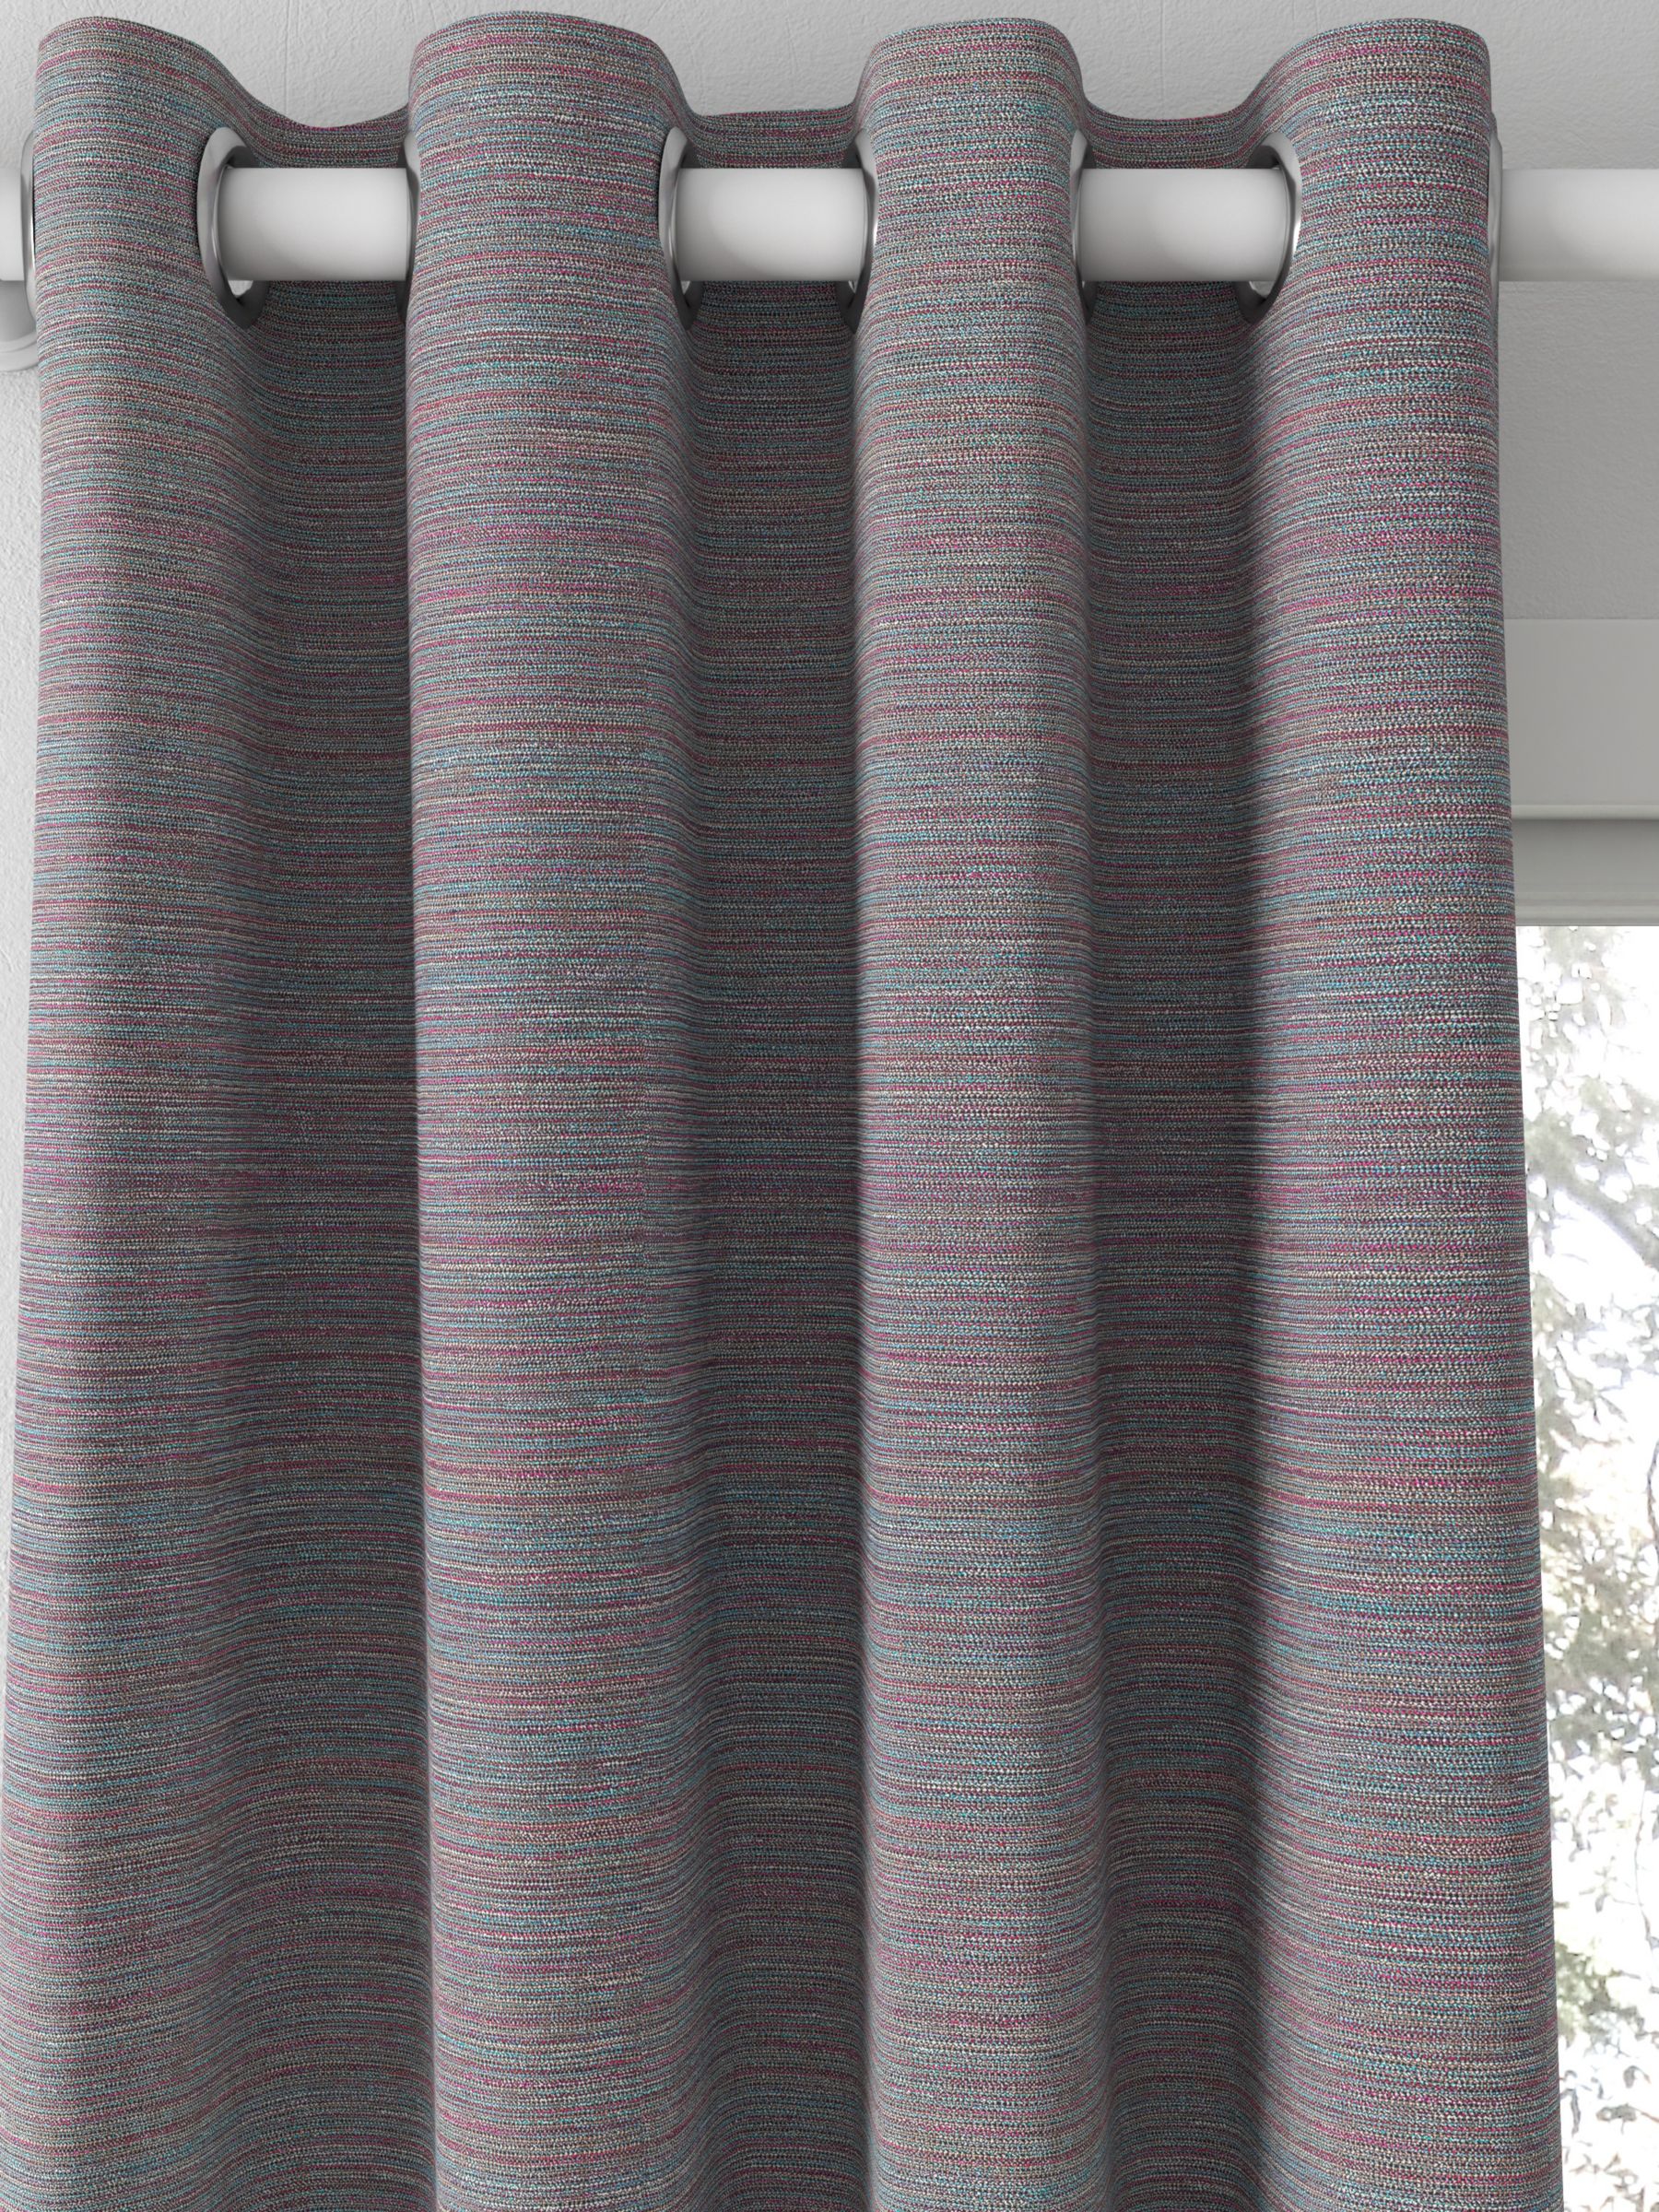 Harlequin Lizella Made to Measure Curtains, Fuchsia